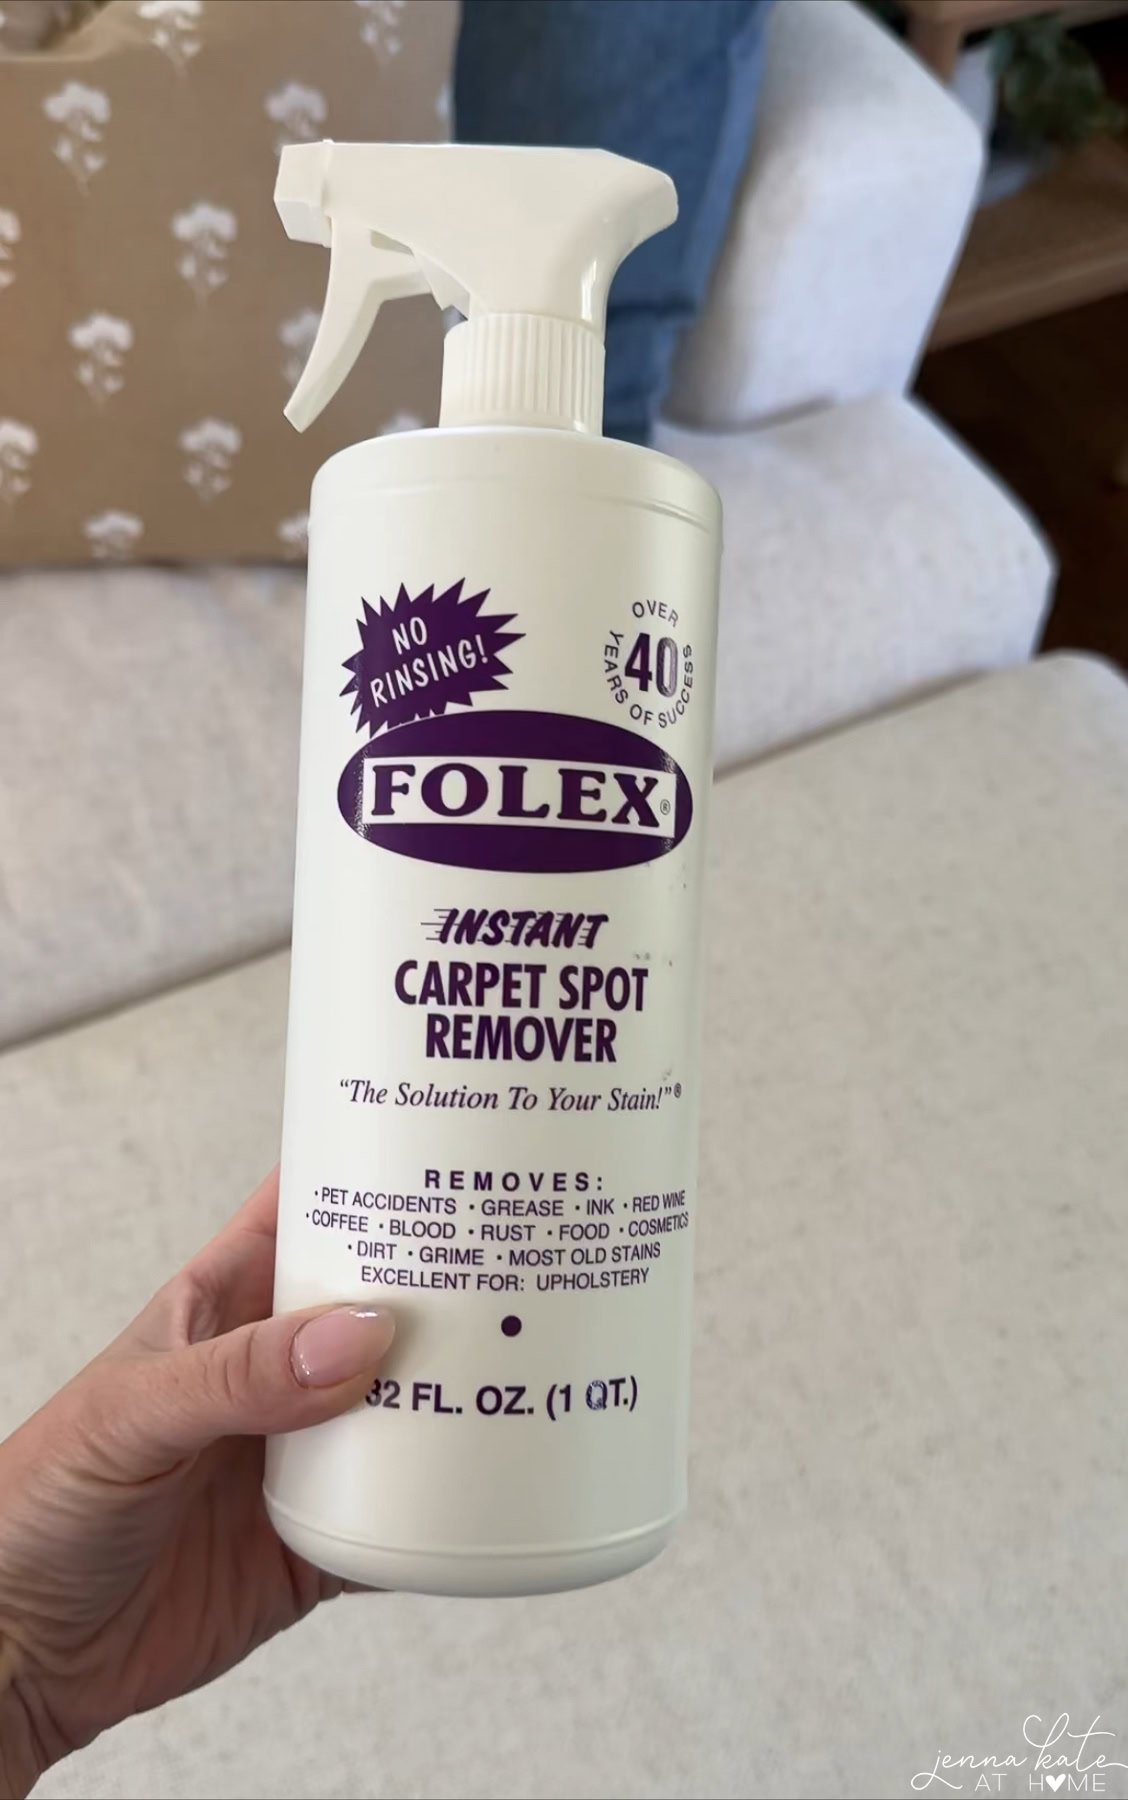 Bottle of Folex stain remover.